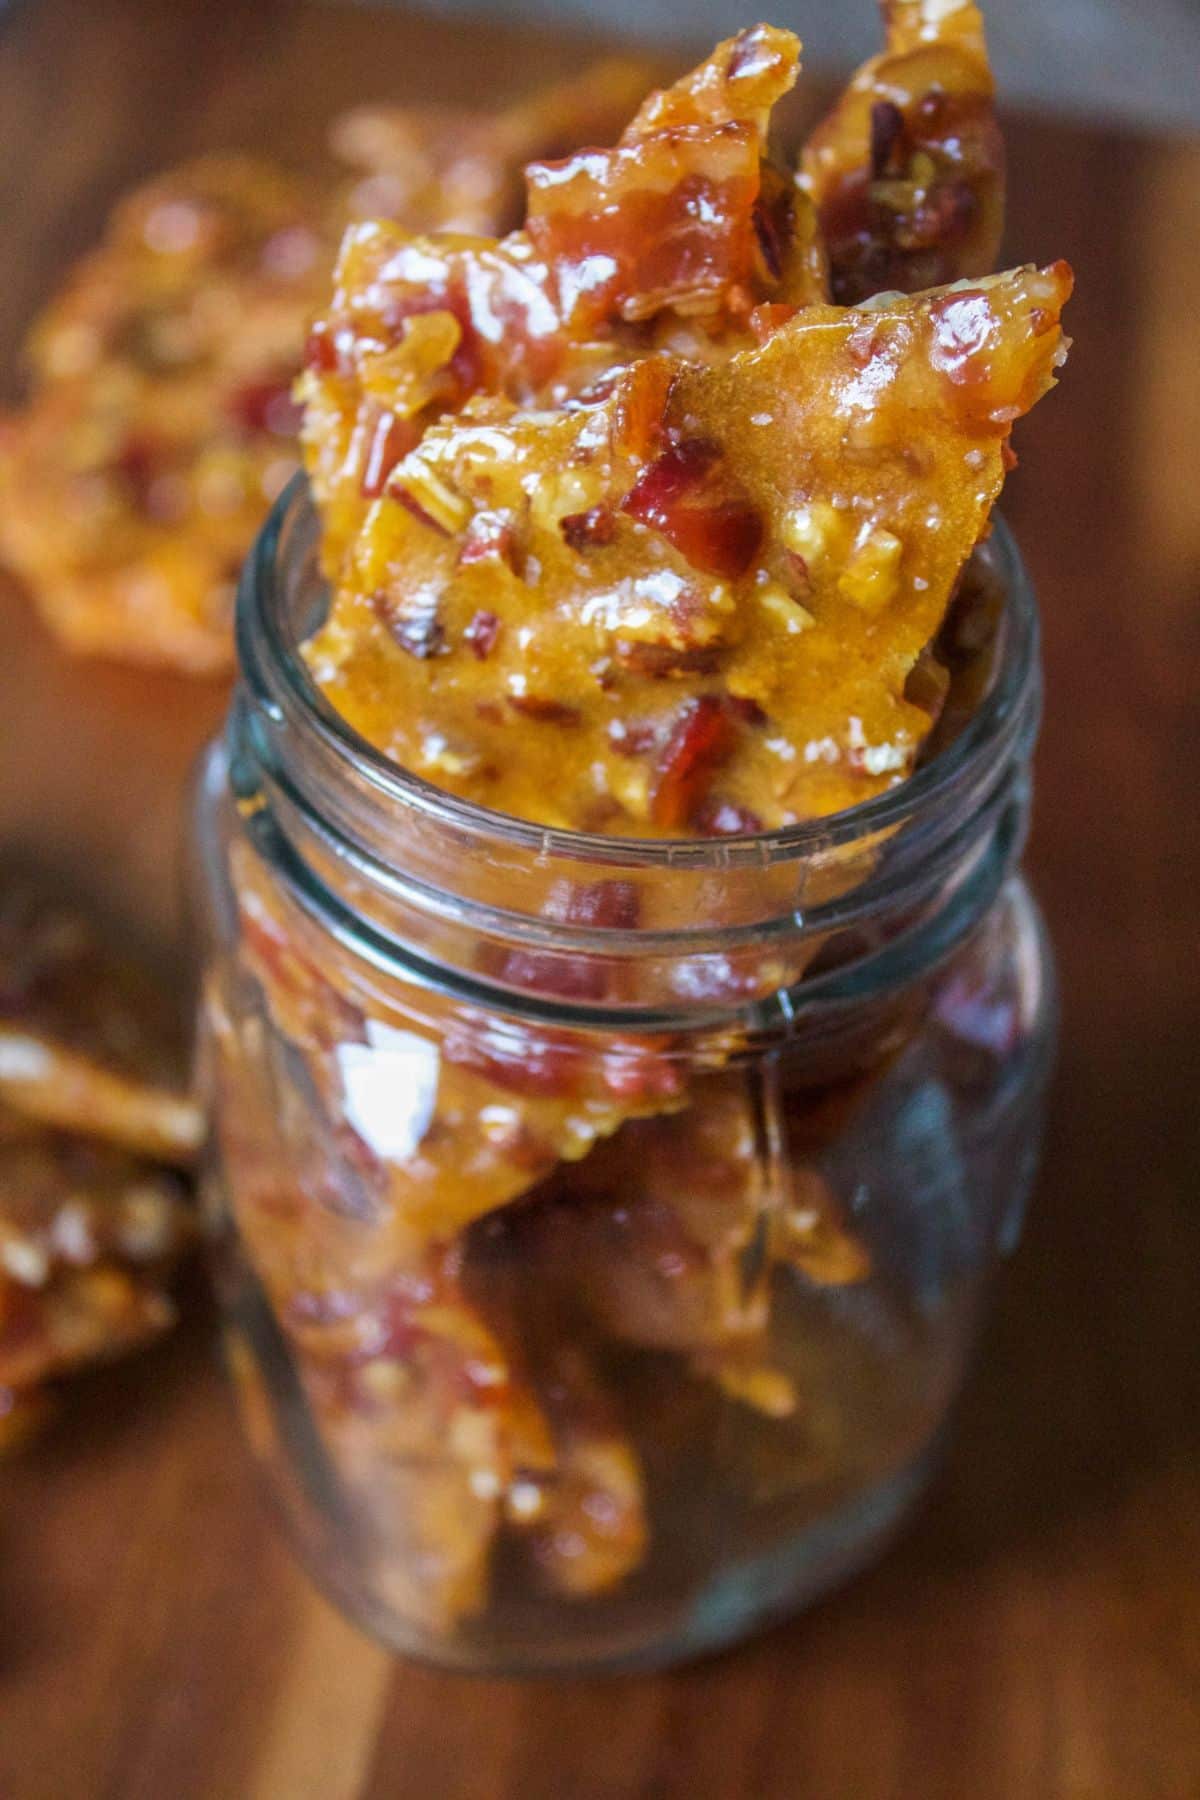 Crunchy bourbon bacon brittles in a glass jar.